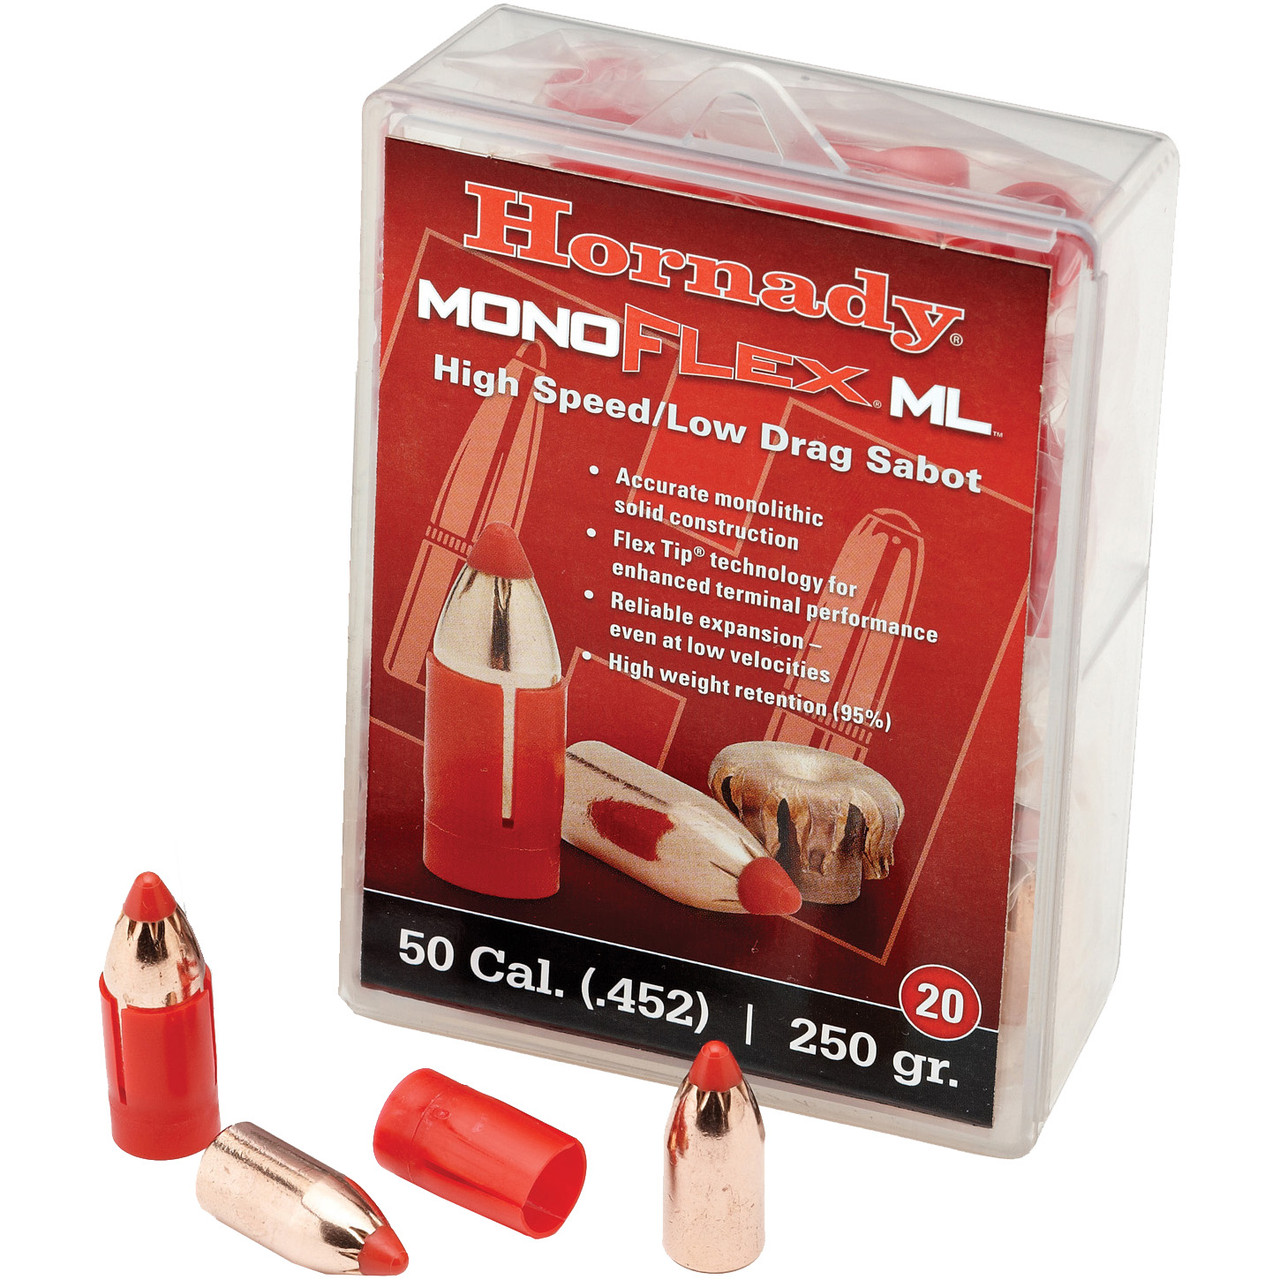 MonoFlex® - Hornady Manufacturing, Inc